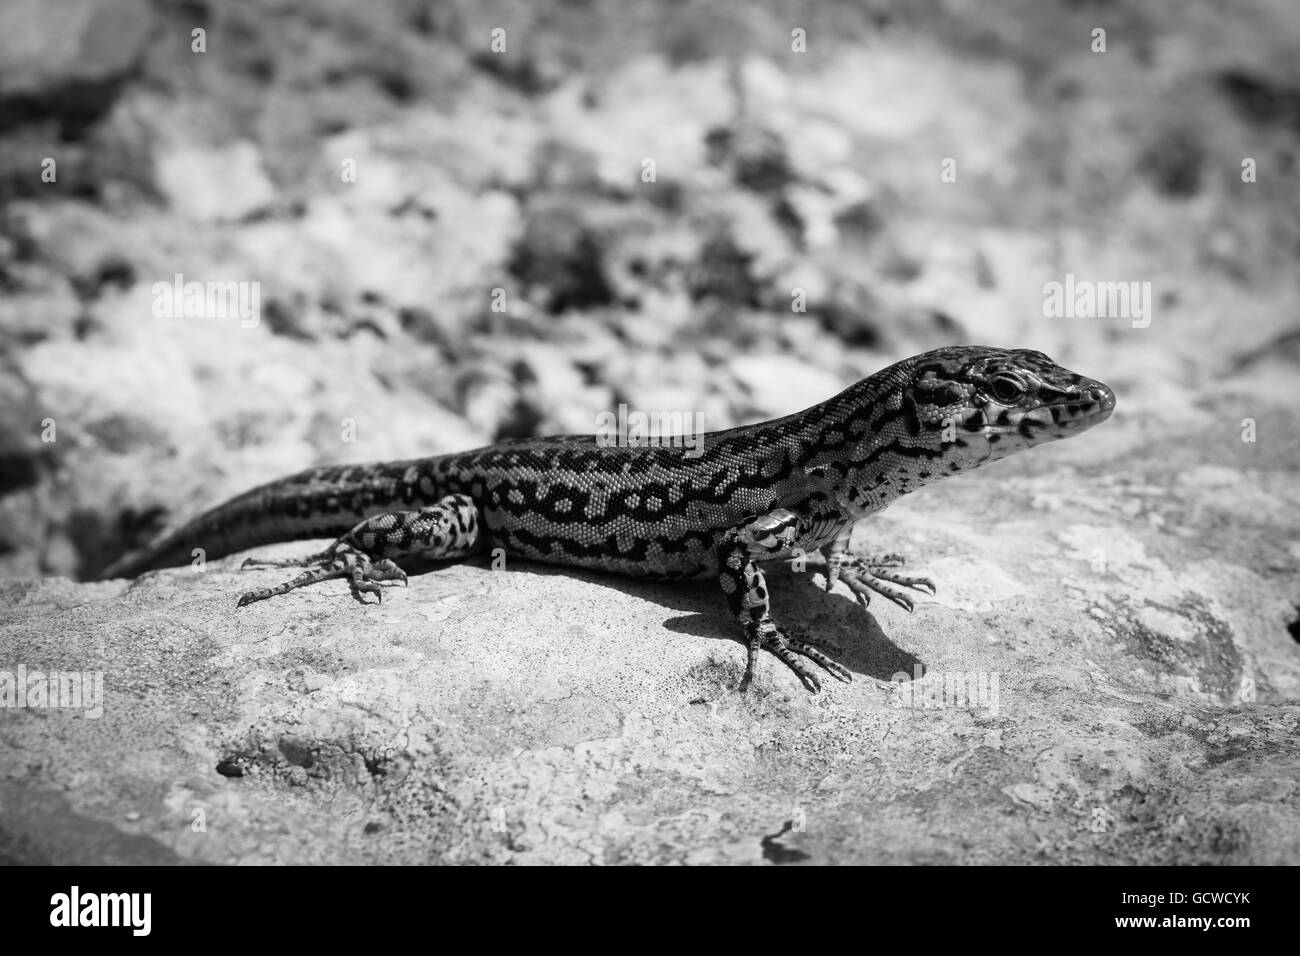 Black and white image of Podarcis Pityusensis Formenterae lizard resting on stone Stock Photo